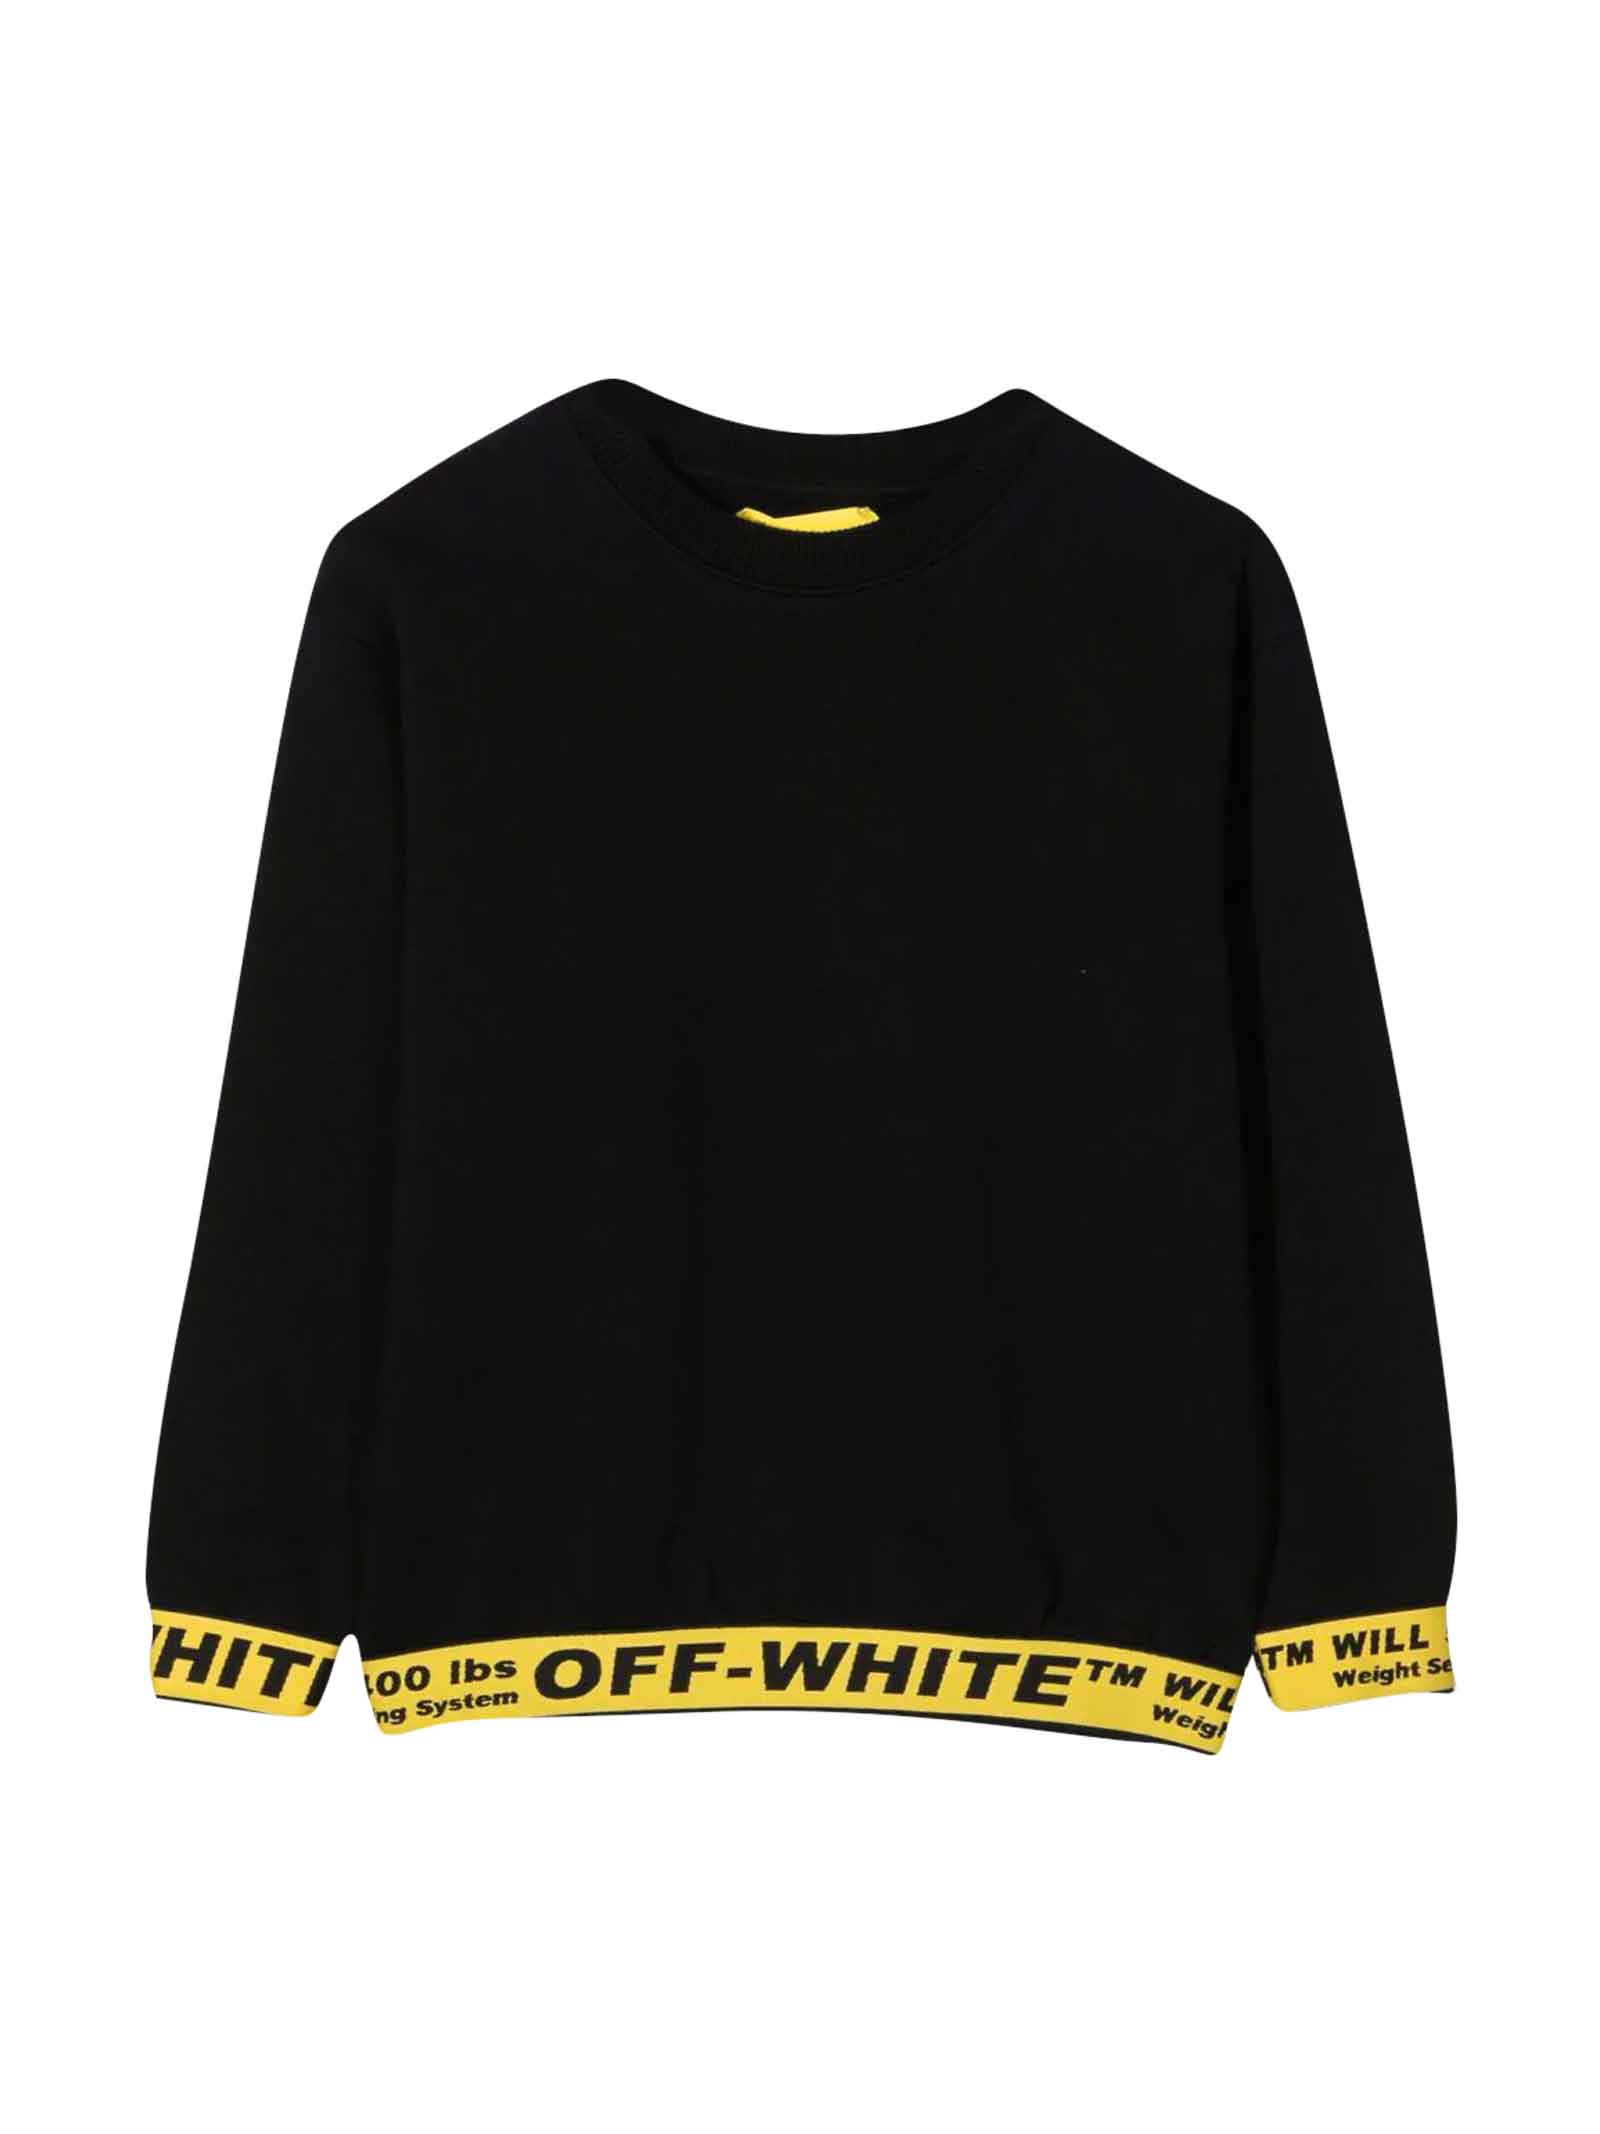 Off-White Black Sweatshirt With Yellow Print